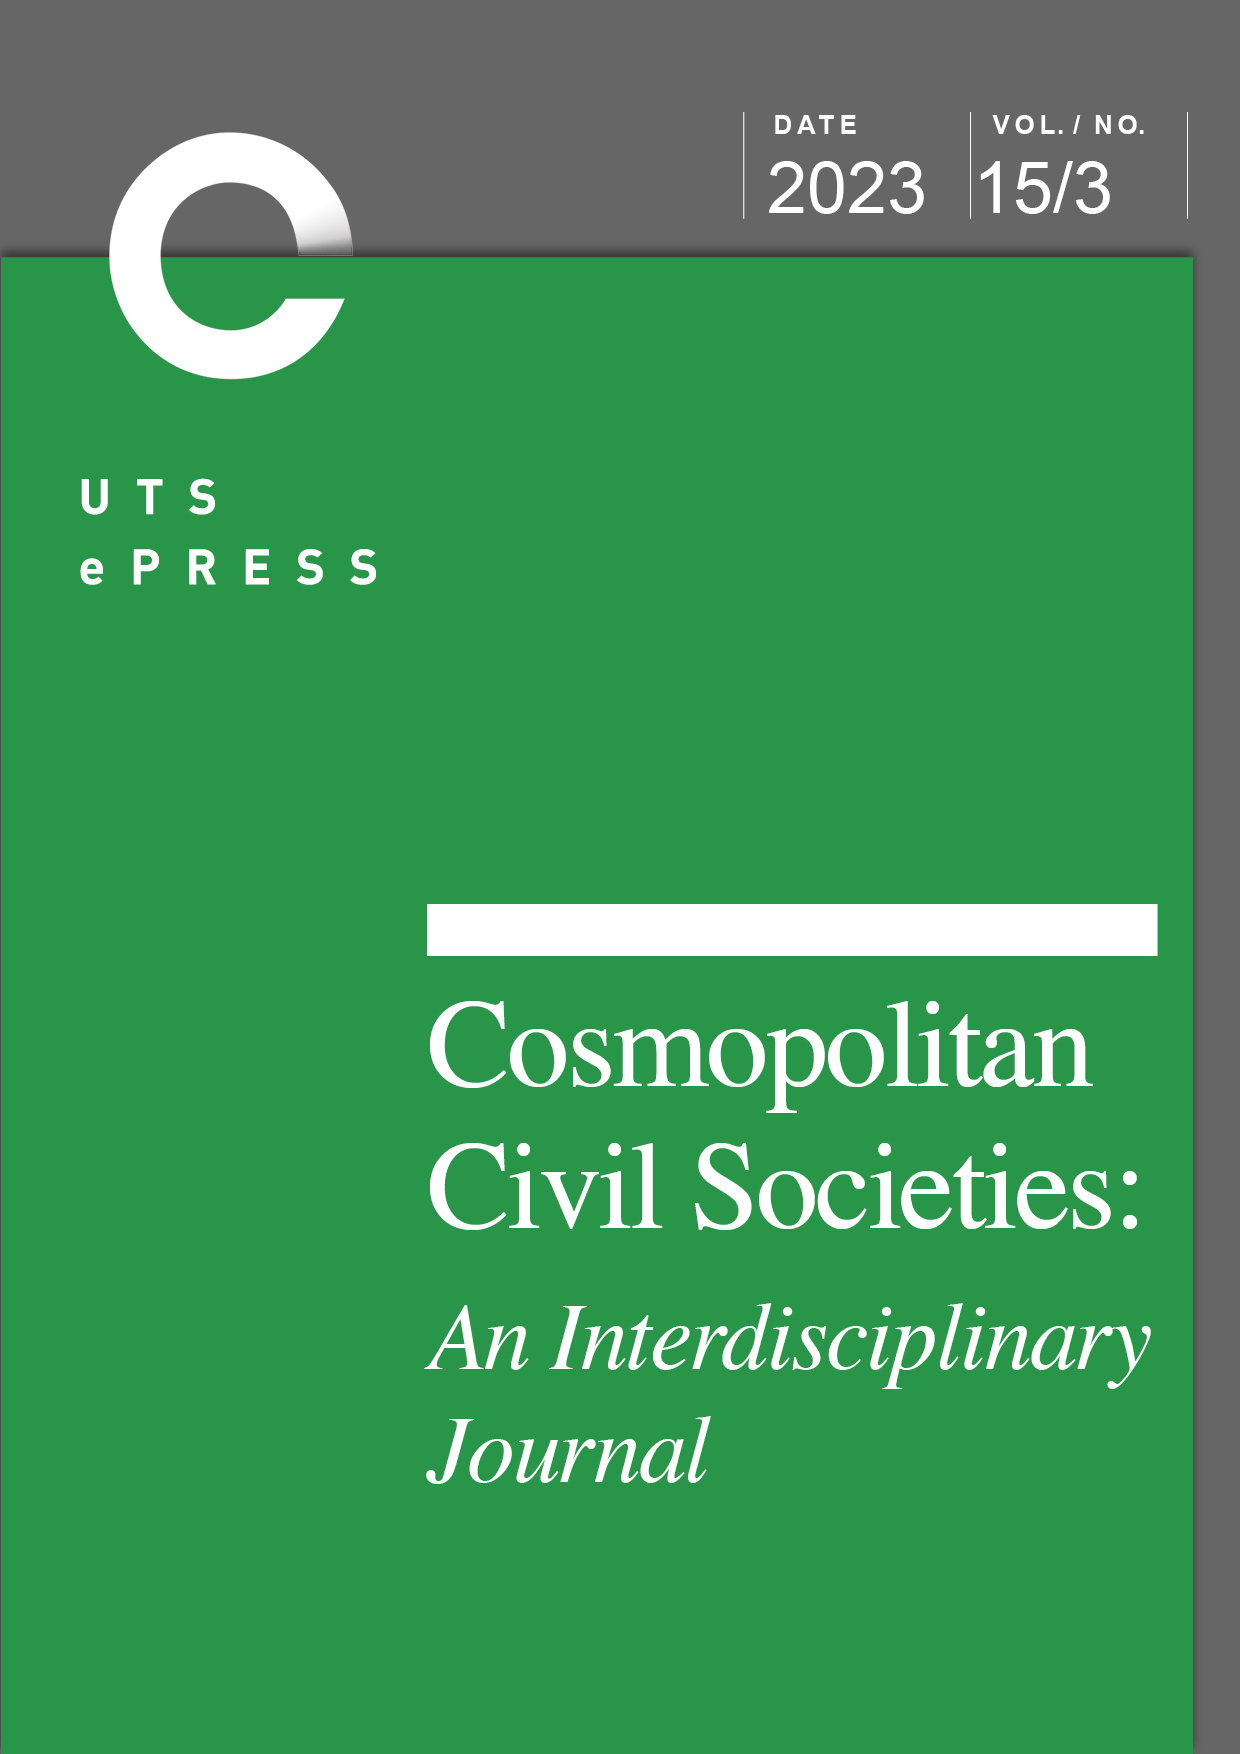 Cosmopolitan Civil Societies Journal cover Vol 14 No 3 2022